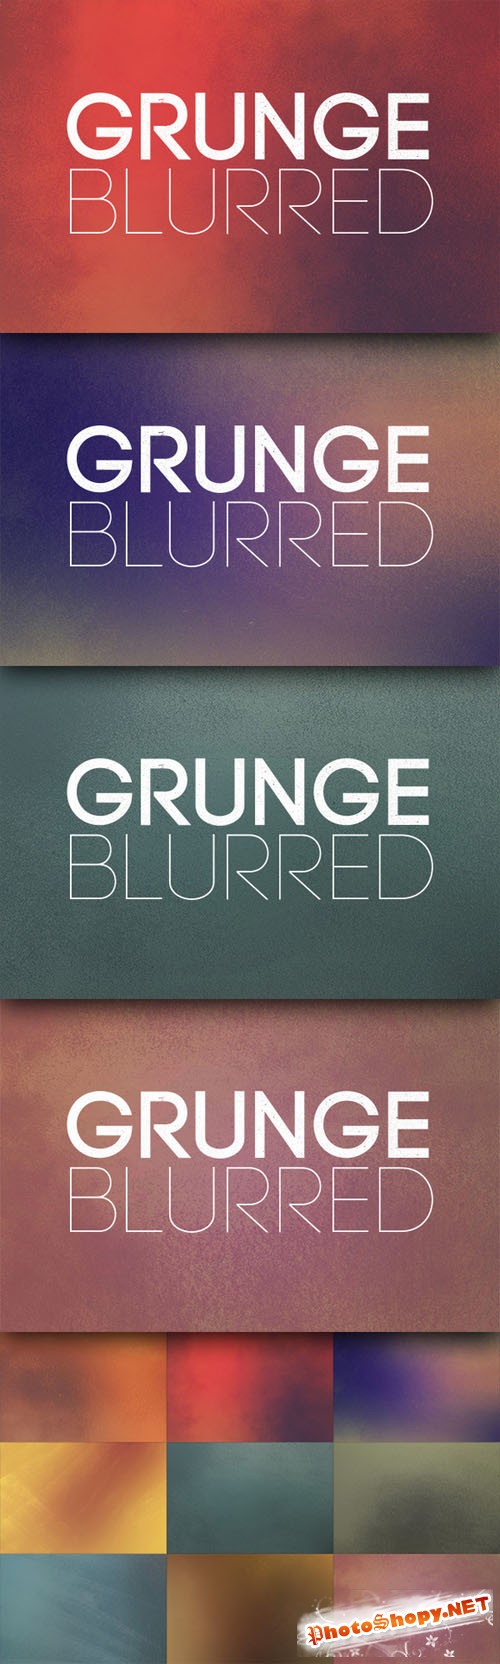 CreativeMarket - Grunge Blurred Backgrounds